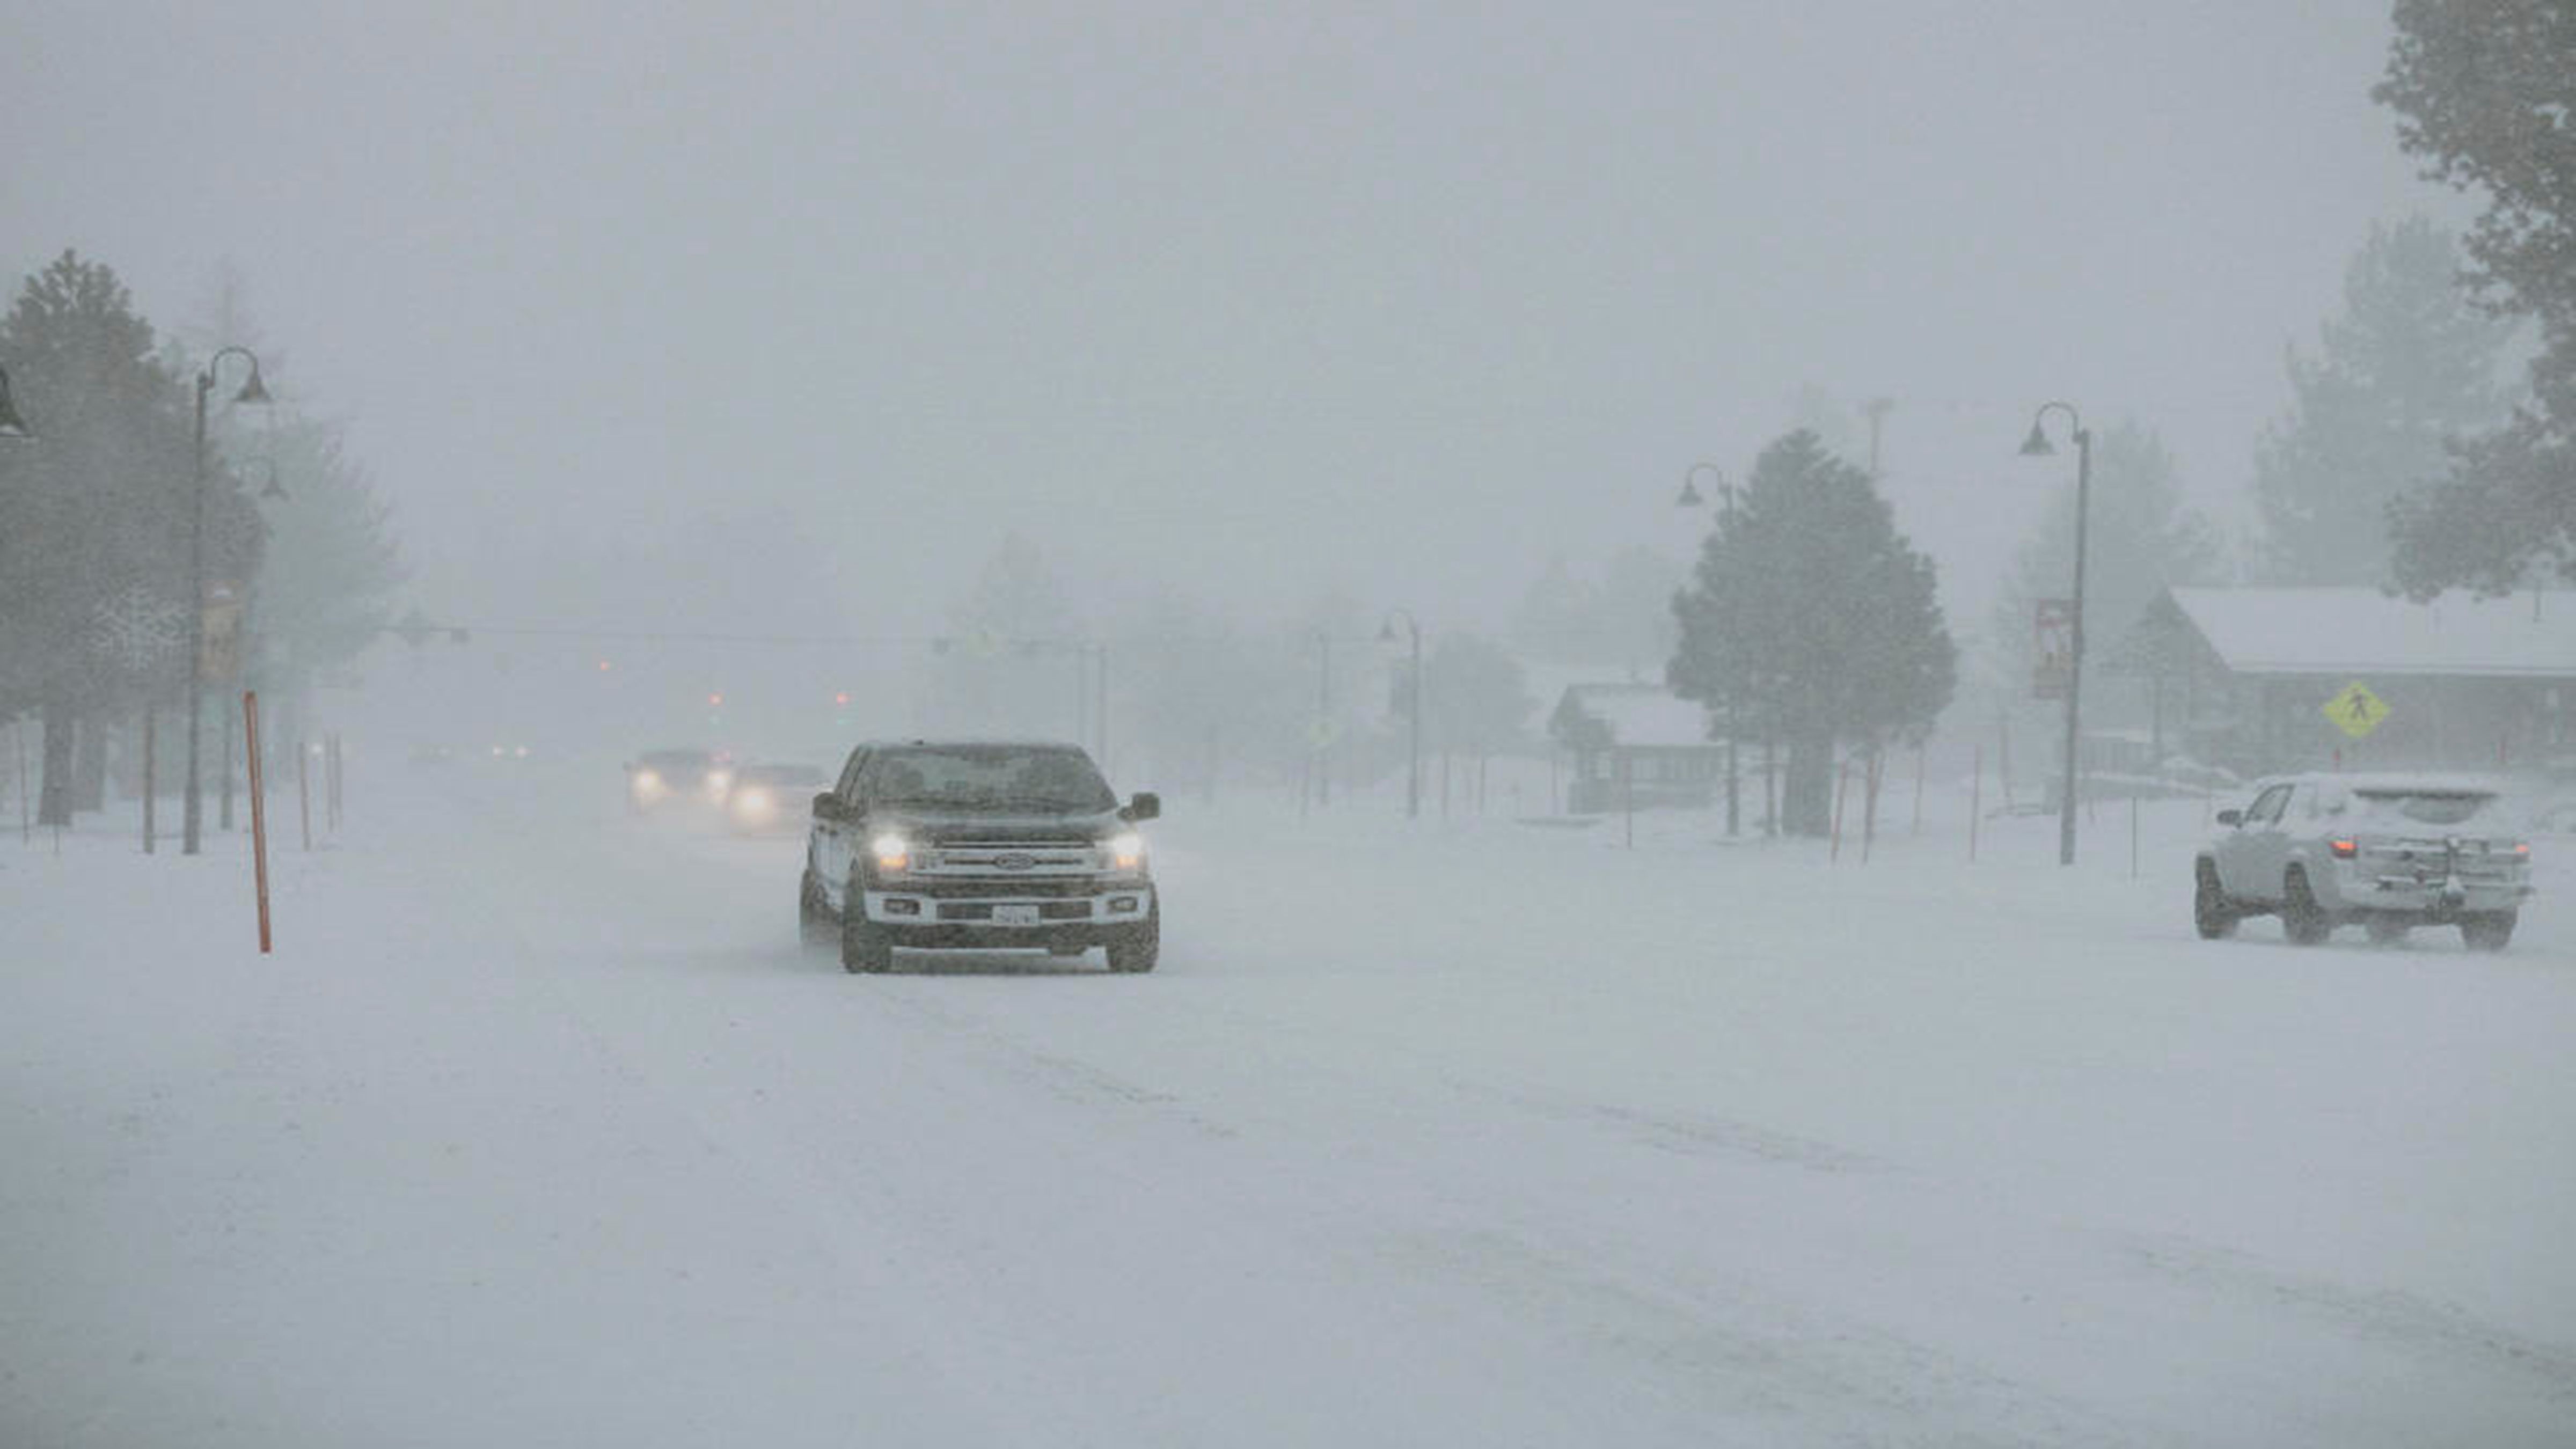 Major storm dumps snow, closes mountain routes in California photo Yahoo News